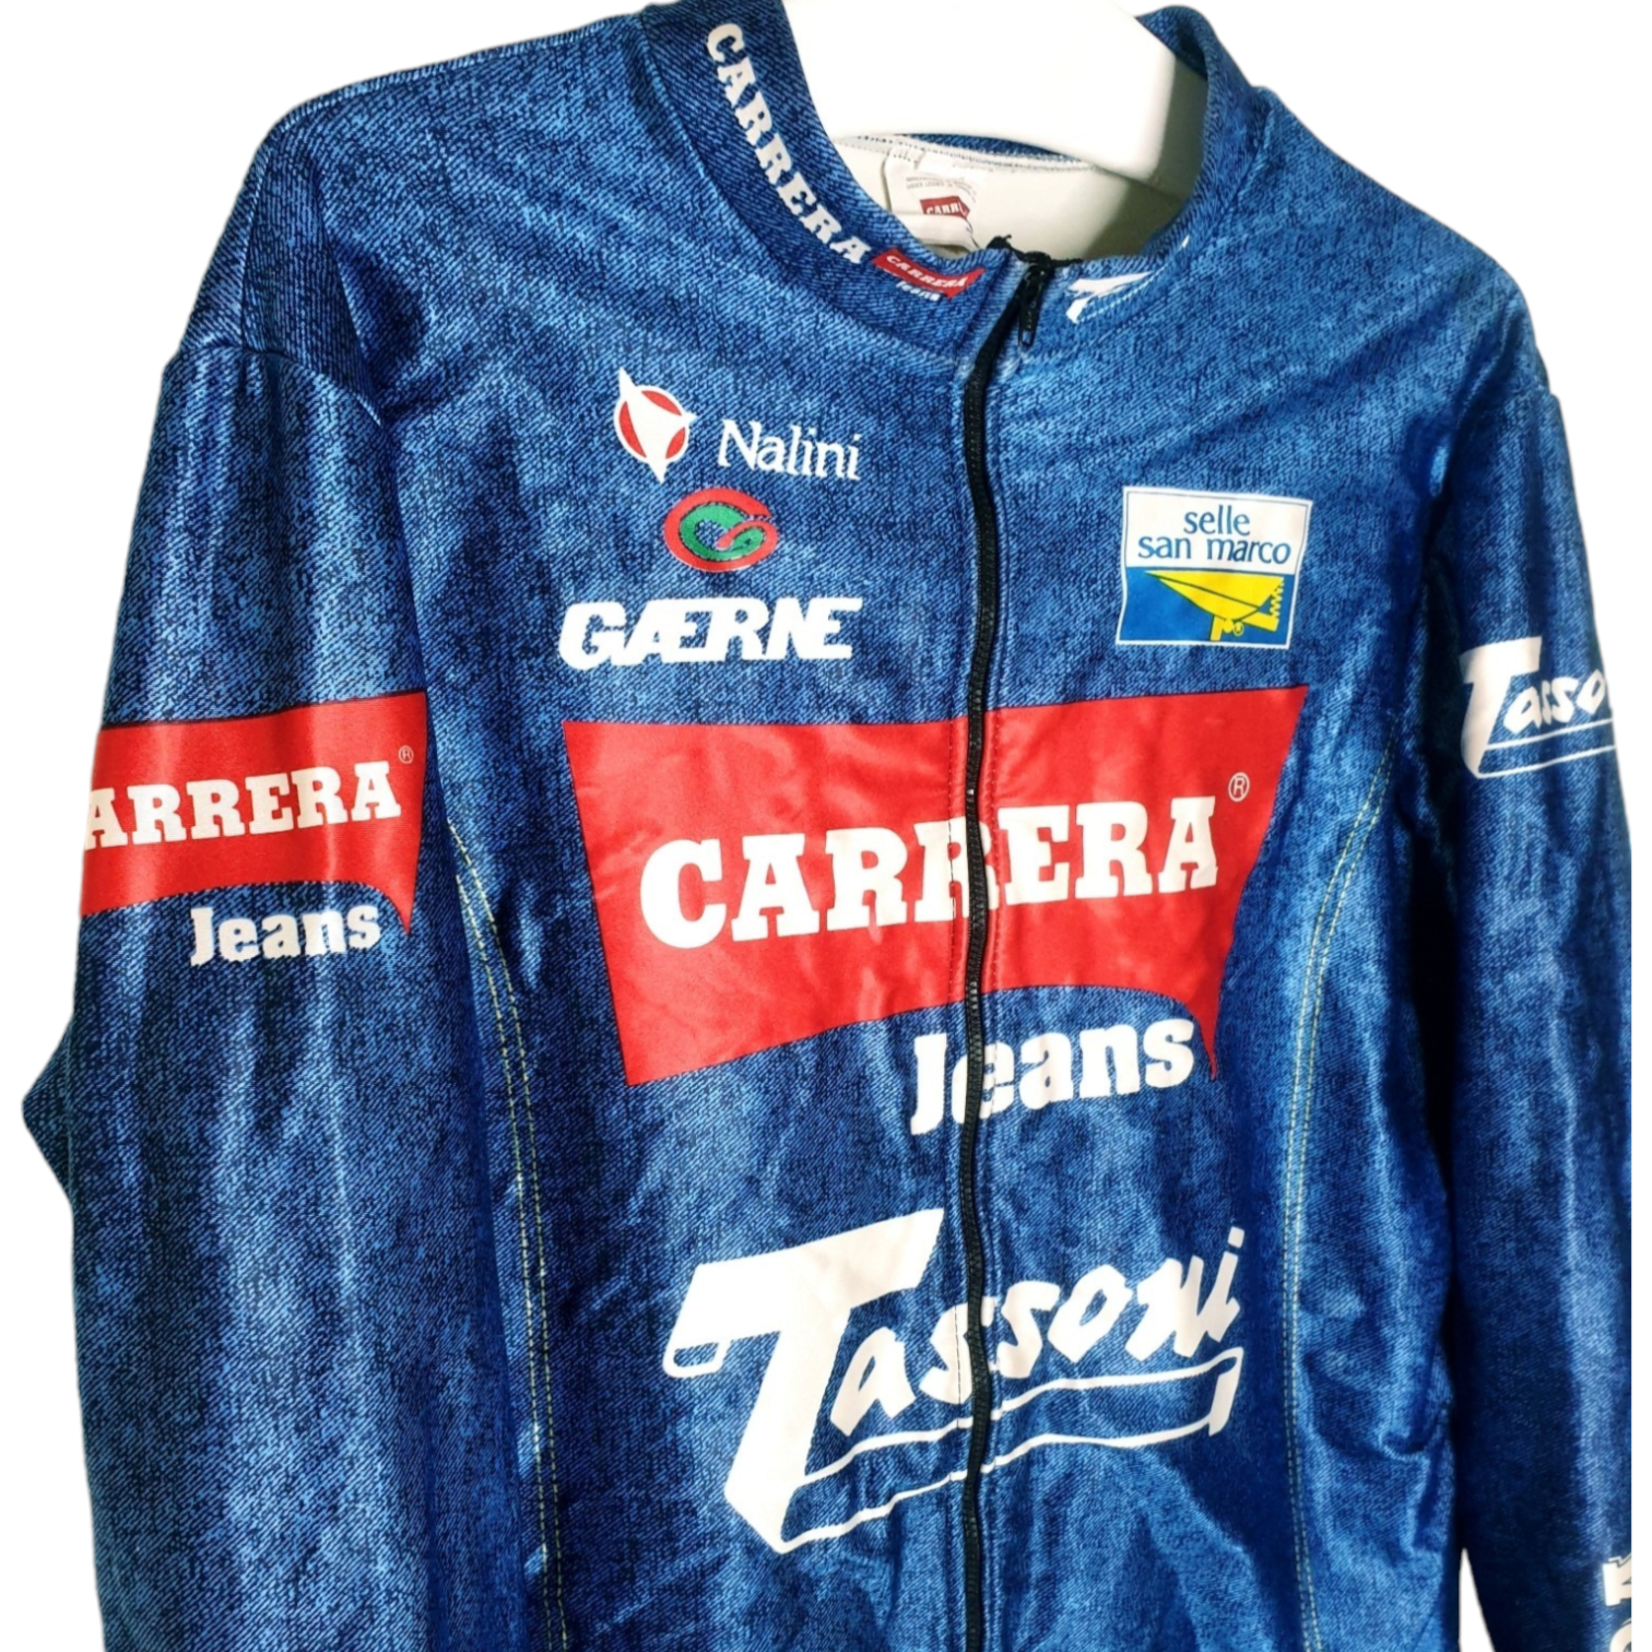 Nalini Origineel Nalini vintage wielerjacket Carrera Jeans - Tassoni 1993